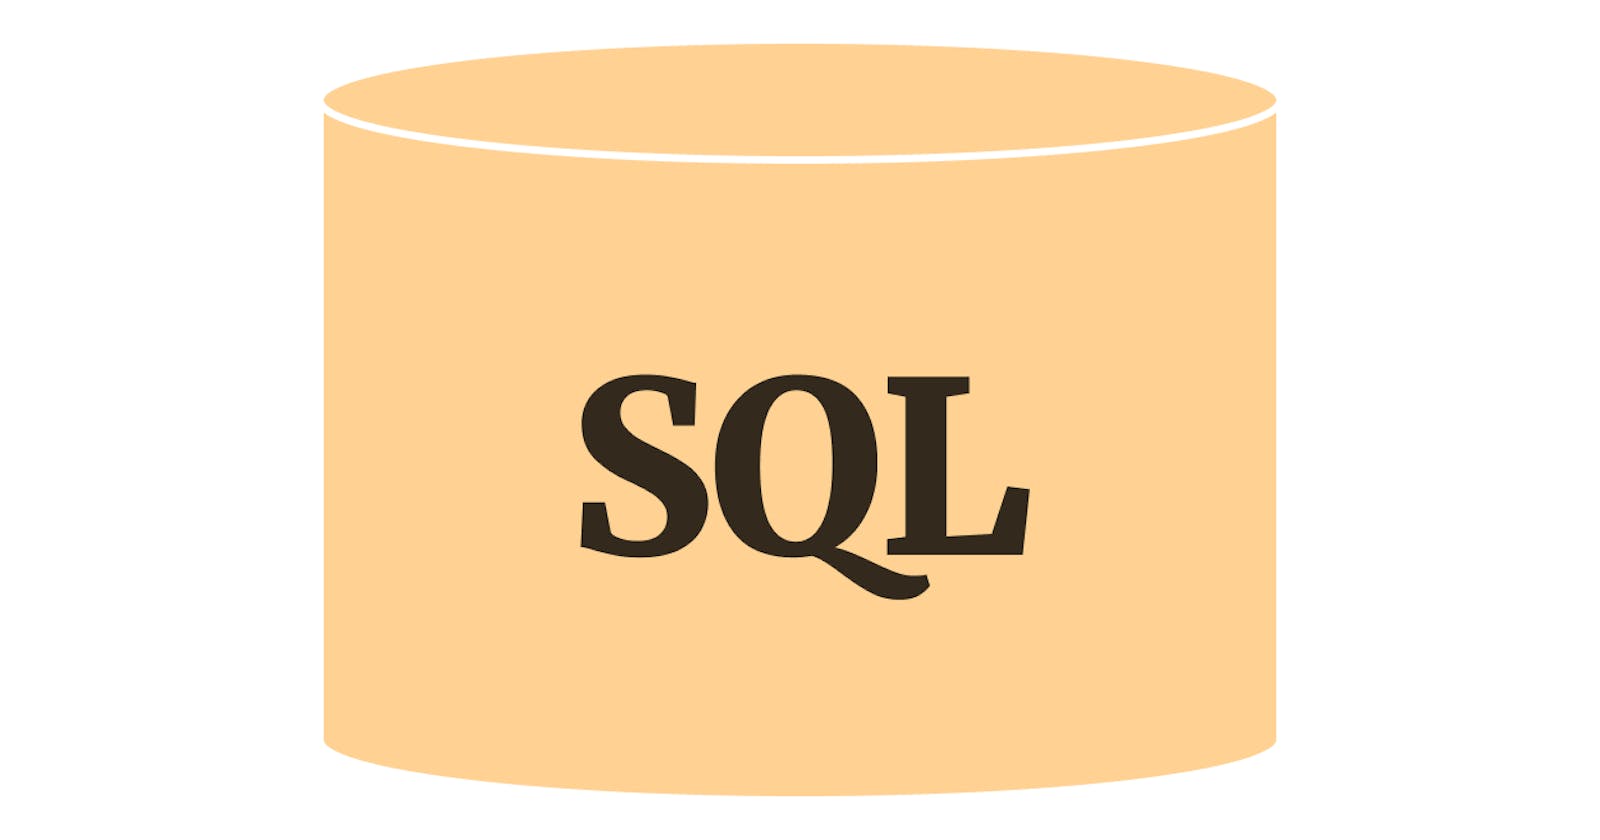 Basic SQL Commands: